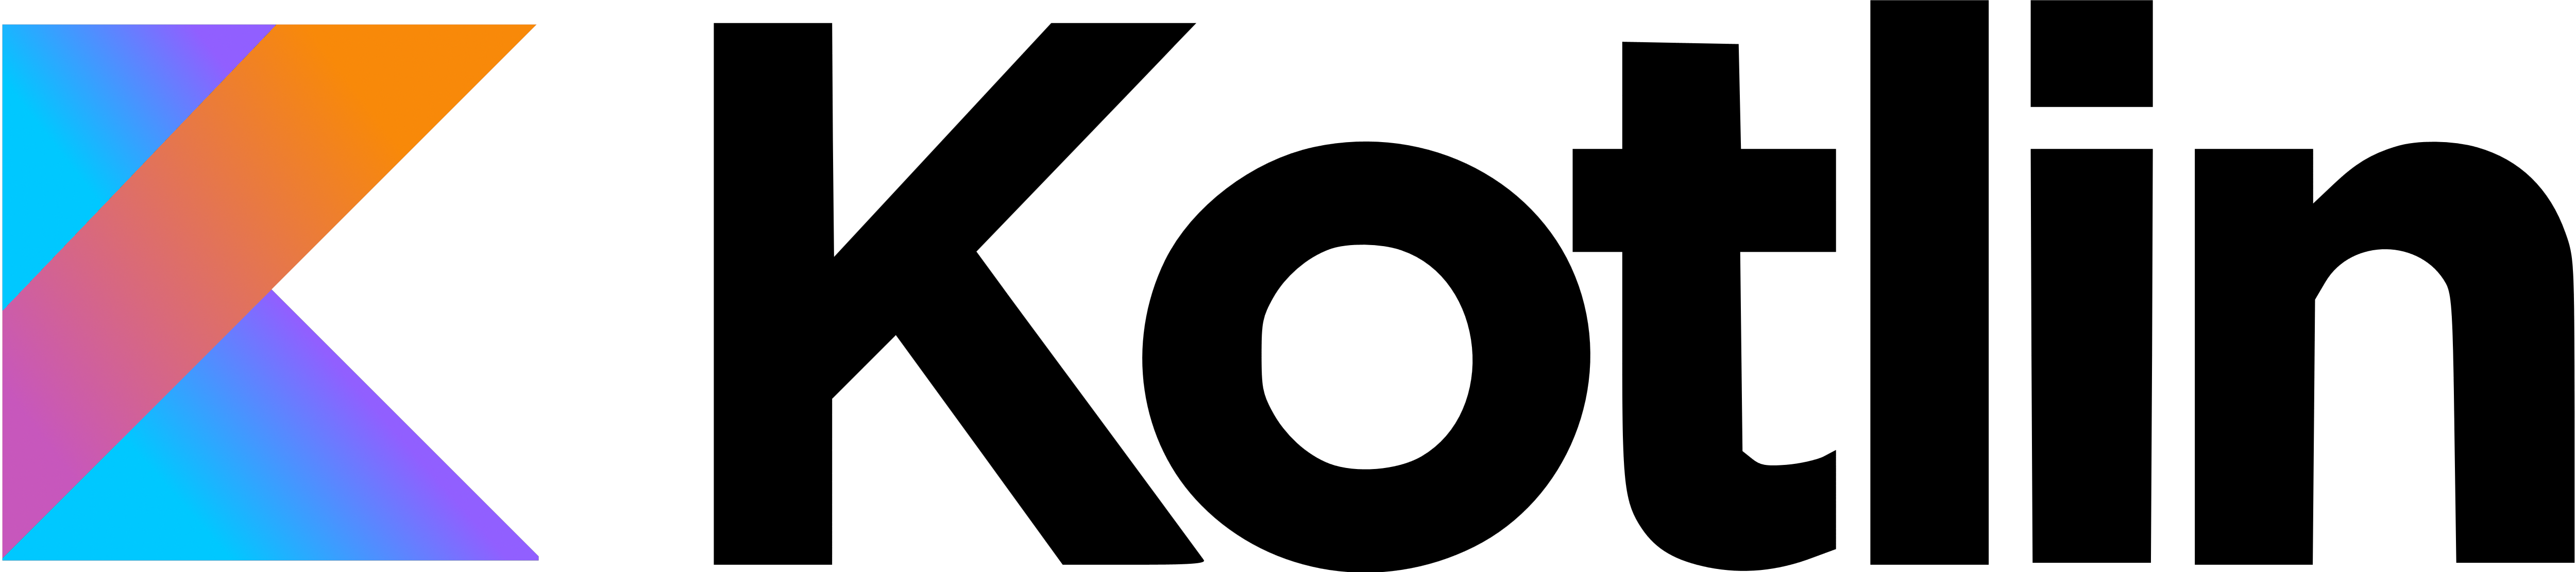 Kotlin – Logos Download - Kotlin, Transparent background PNG HD thumbnail